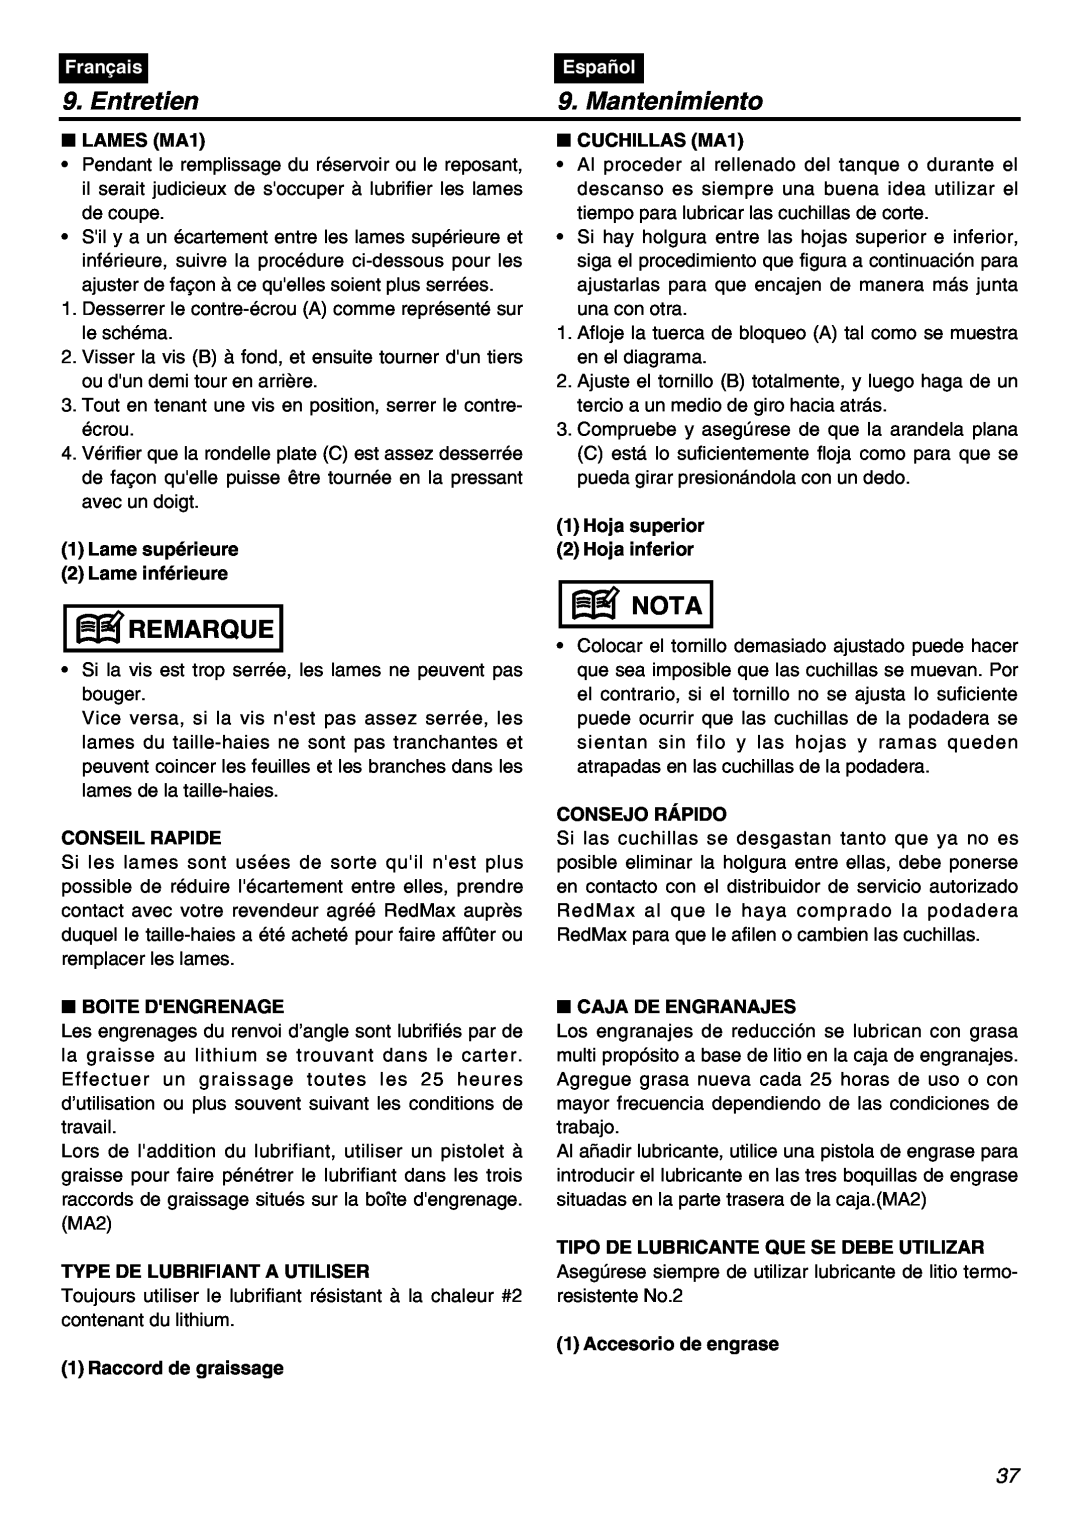 RedMax SRTZ2401F manual Entretien, Mantenimiento, Remarque, Nota, Français, Español 